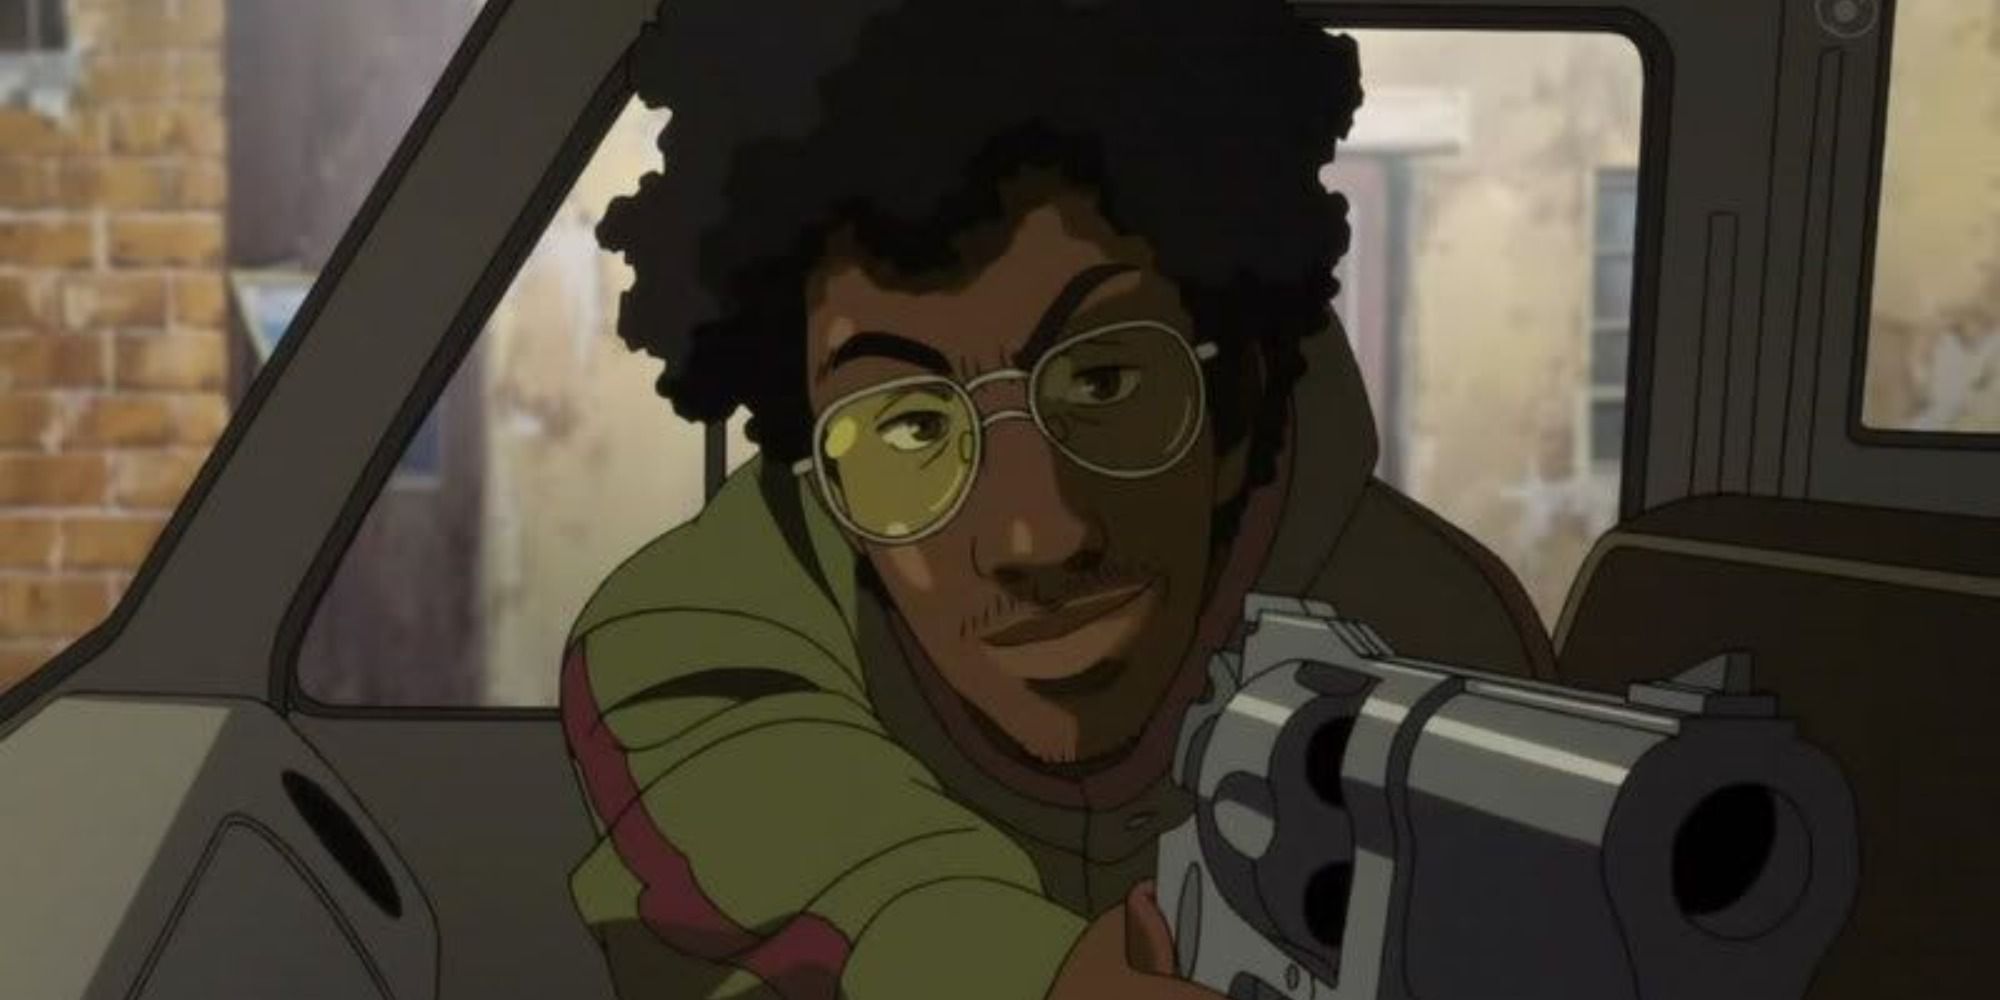 Satoshi pointing a gun at someone in the Michiko & Hatchin anime